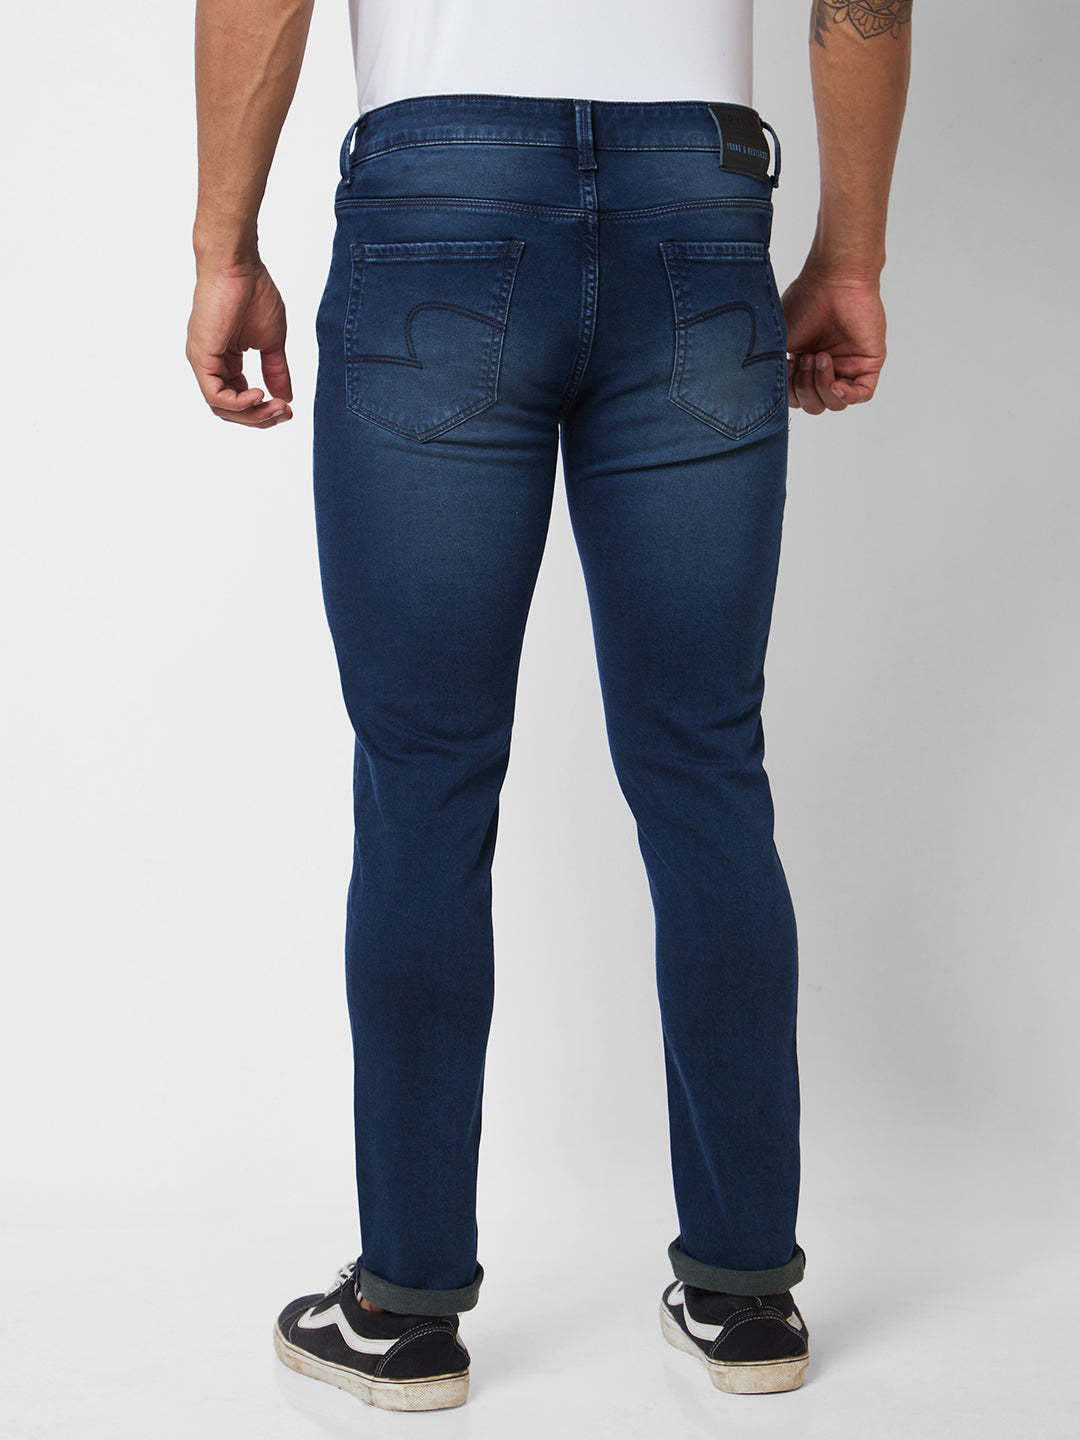 Buy OnlineSpykar Low Rise Slim Fit Blue Jeans for Men